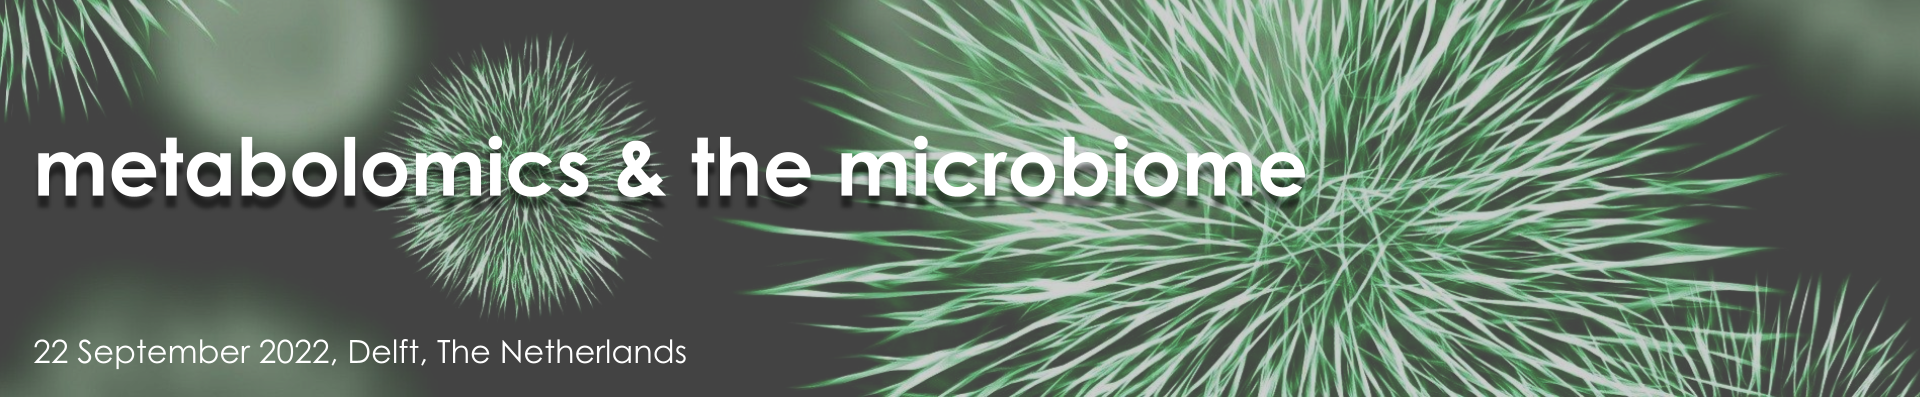 Metabolomics & the Microbiome Meeting 2022